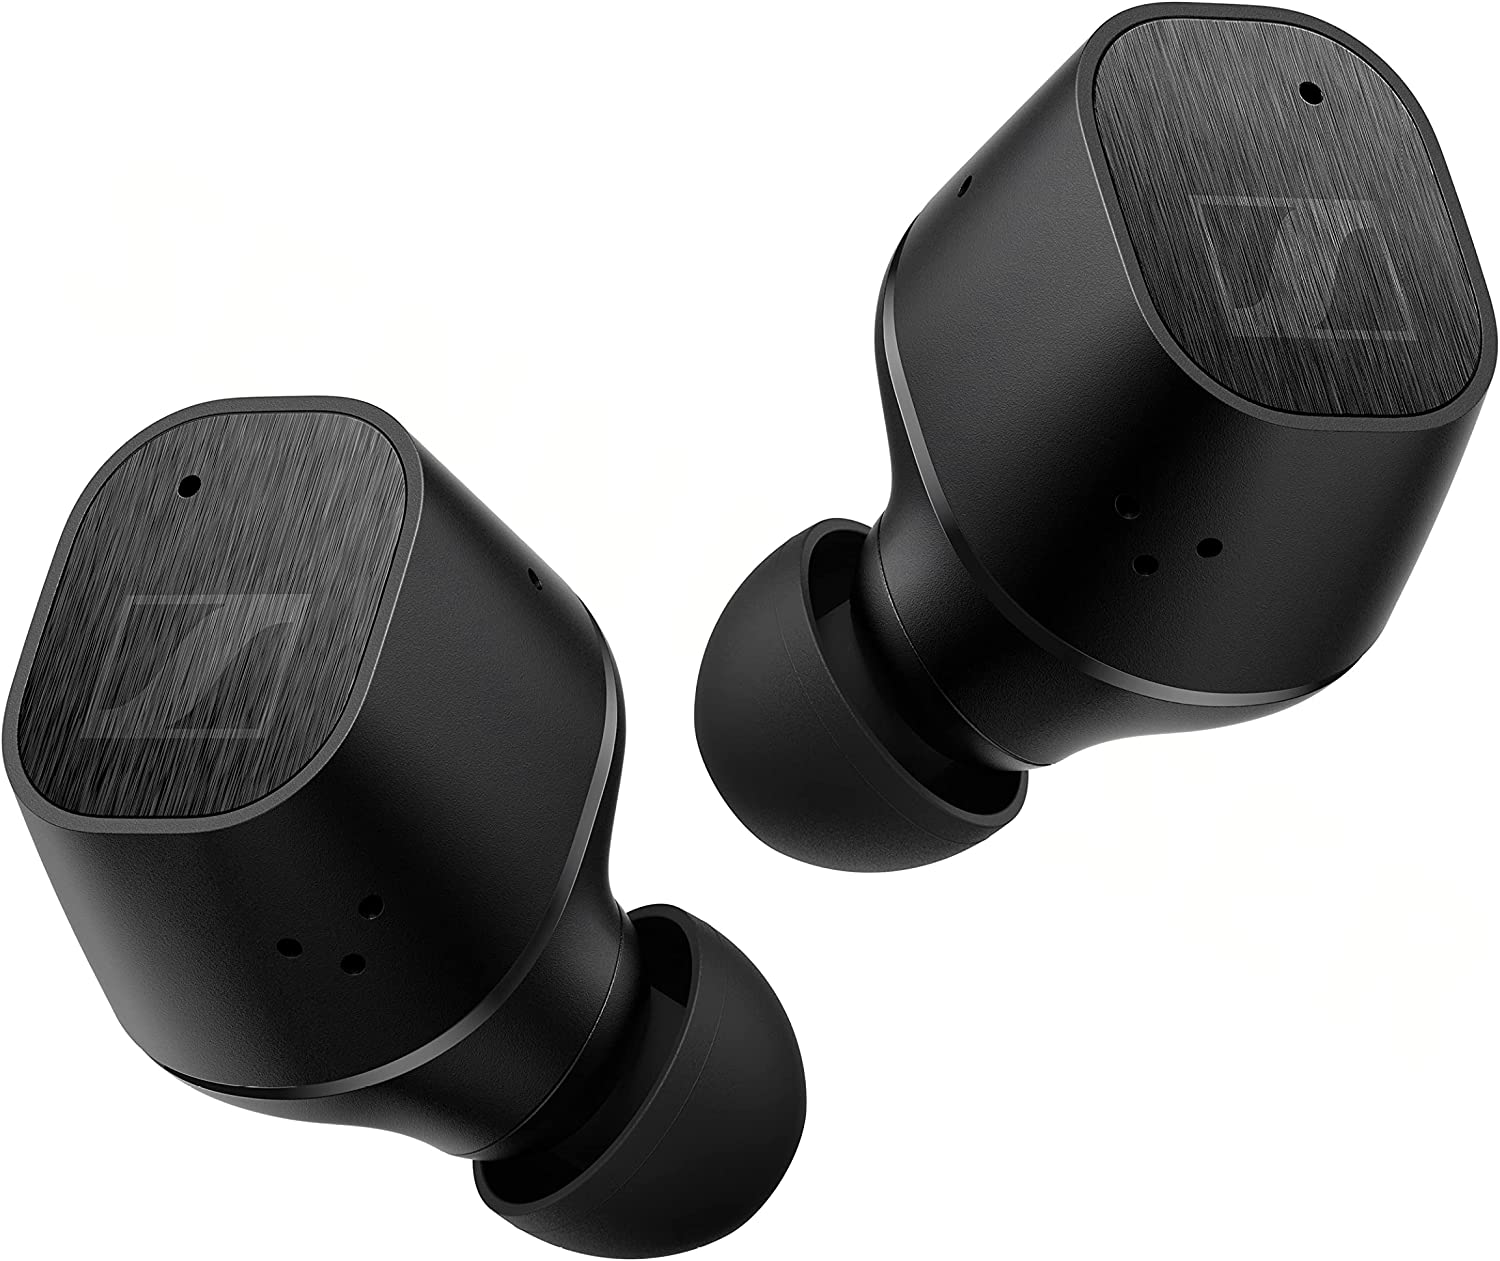 Sennheiser CX Plus True Wireless Special Edition In-Ear Headphones $79.95 + Free Shipping